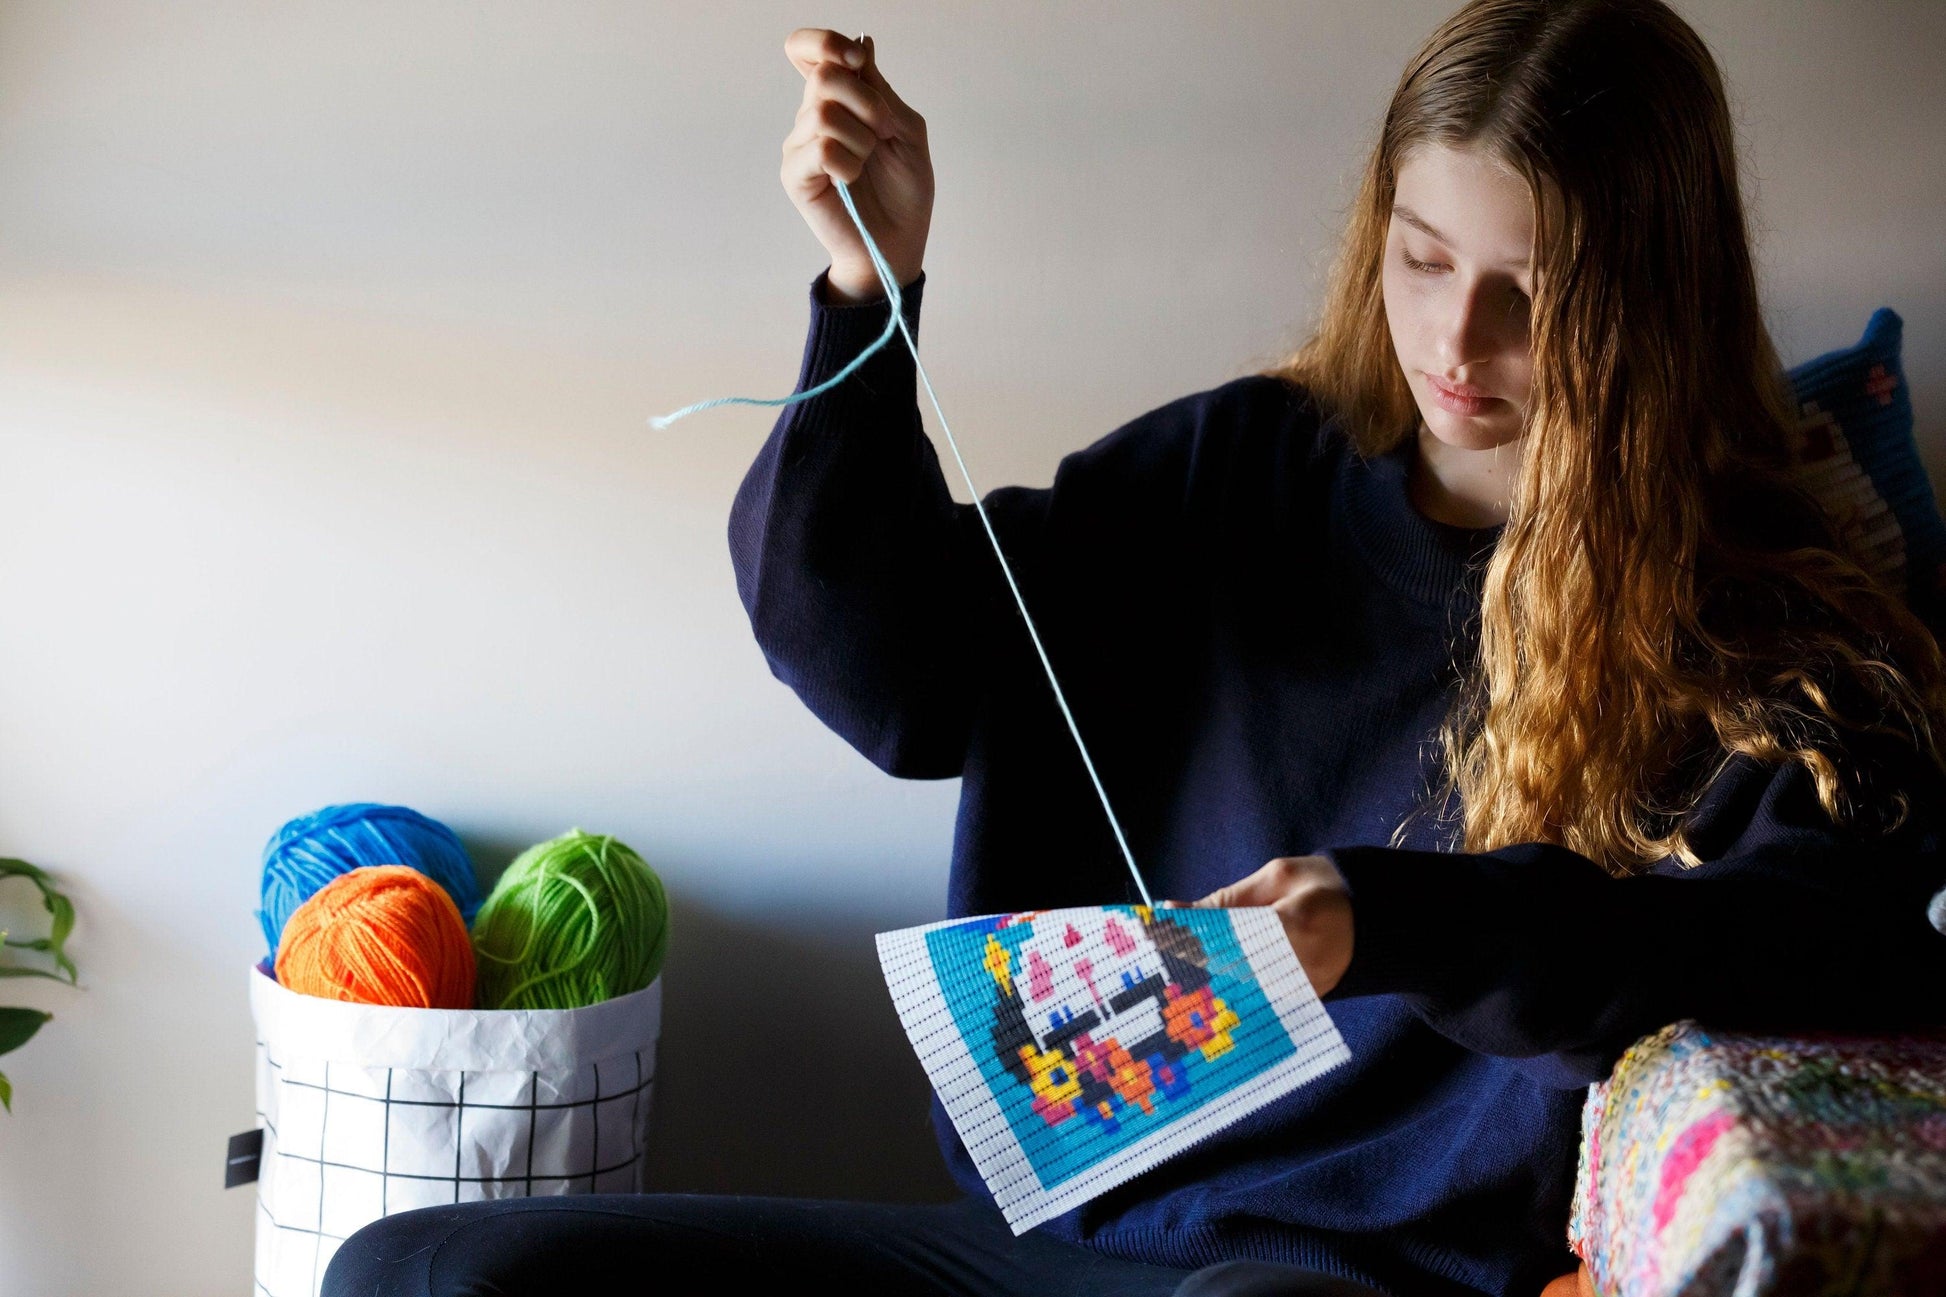 DIY Fairy - Needlepoint Embroidery Craft Kit - Ethimaart 